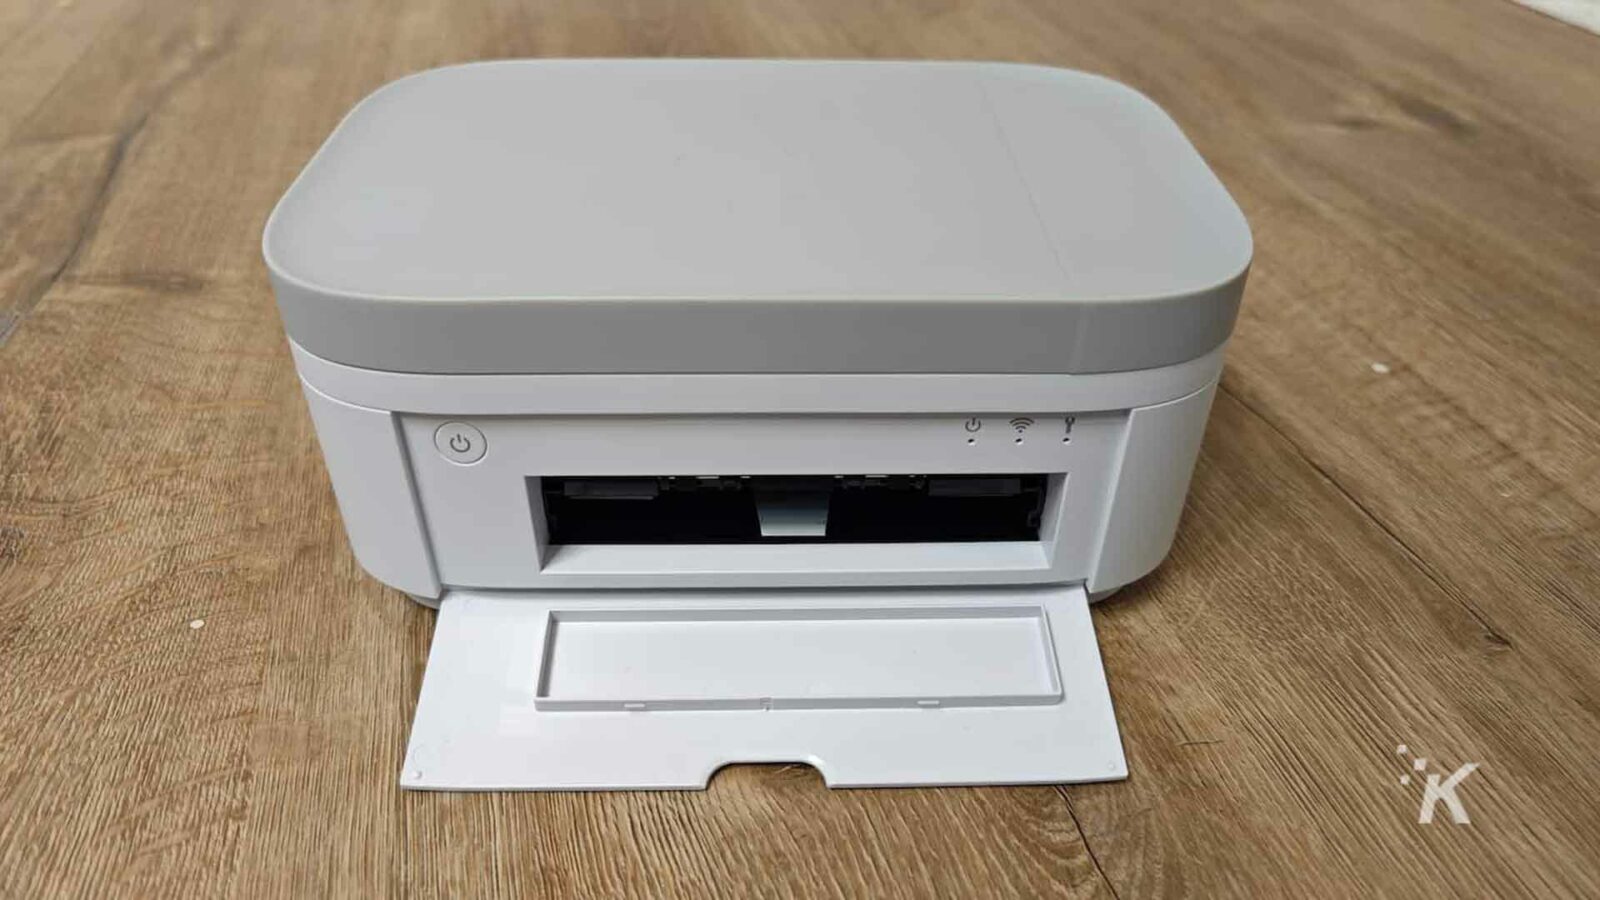 Imprimante HP blanche sur le sol